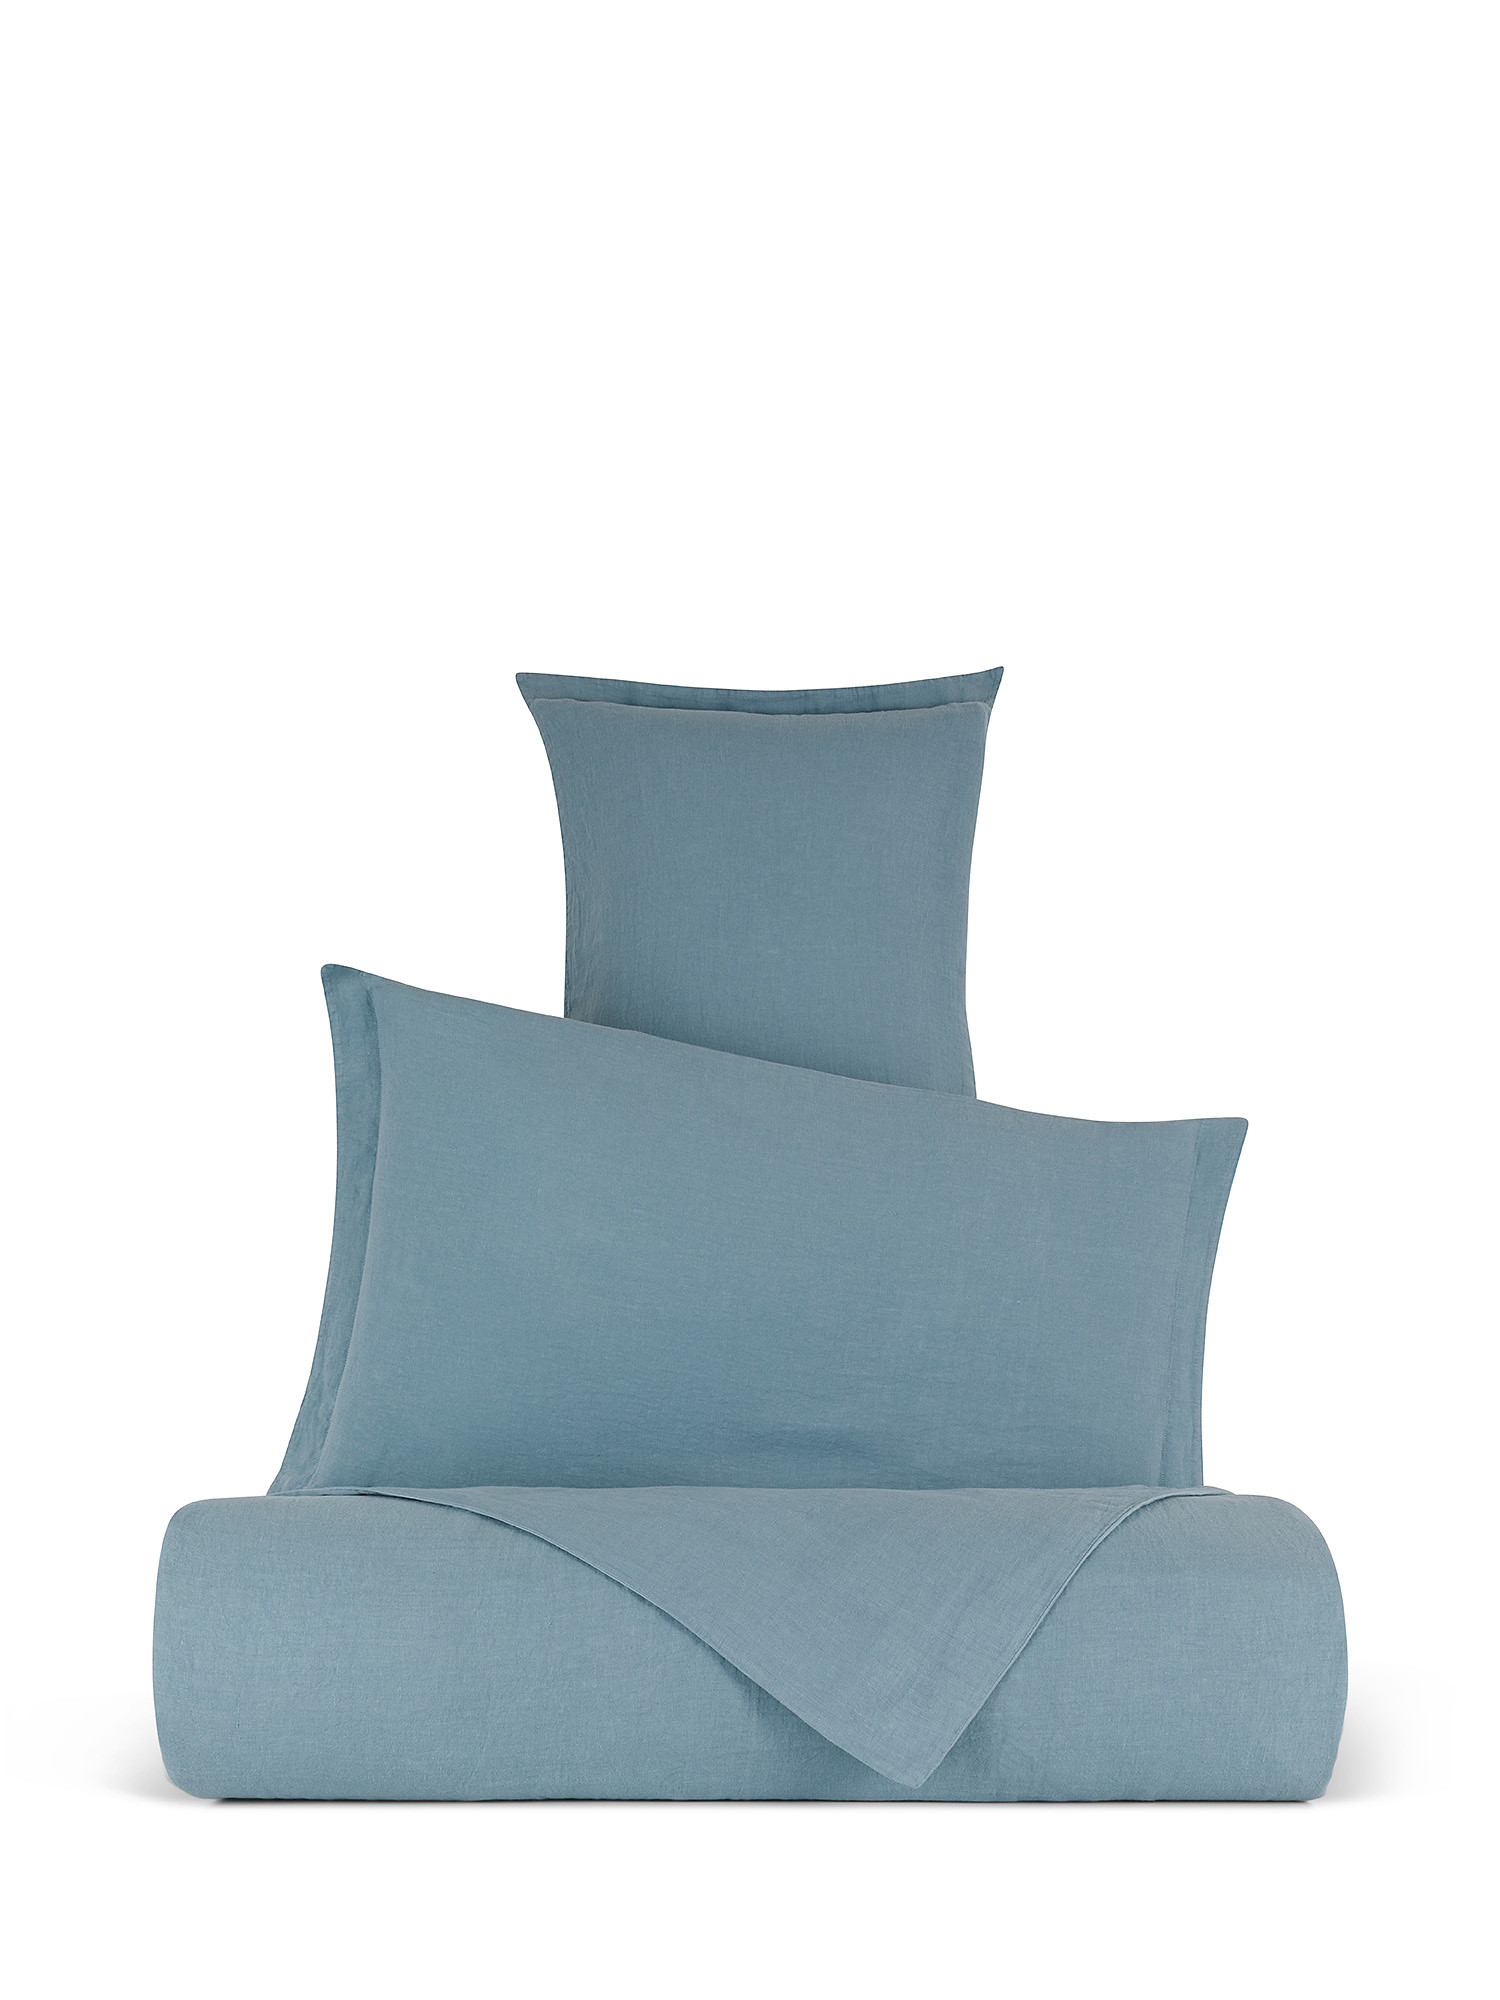 Zefiro plain color linen and cotton pillowcase, Blue, large image number 2